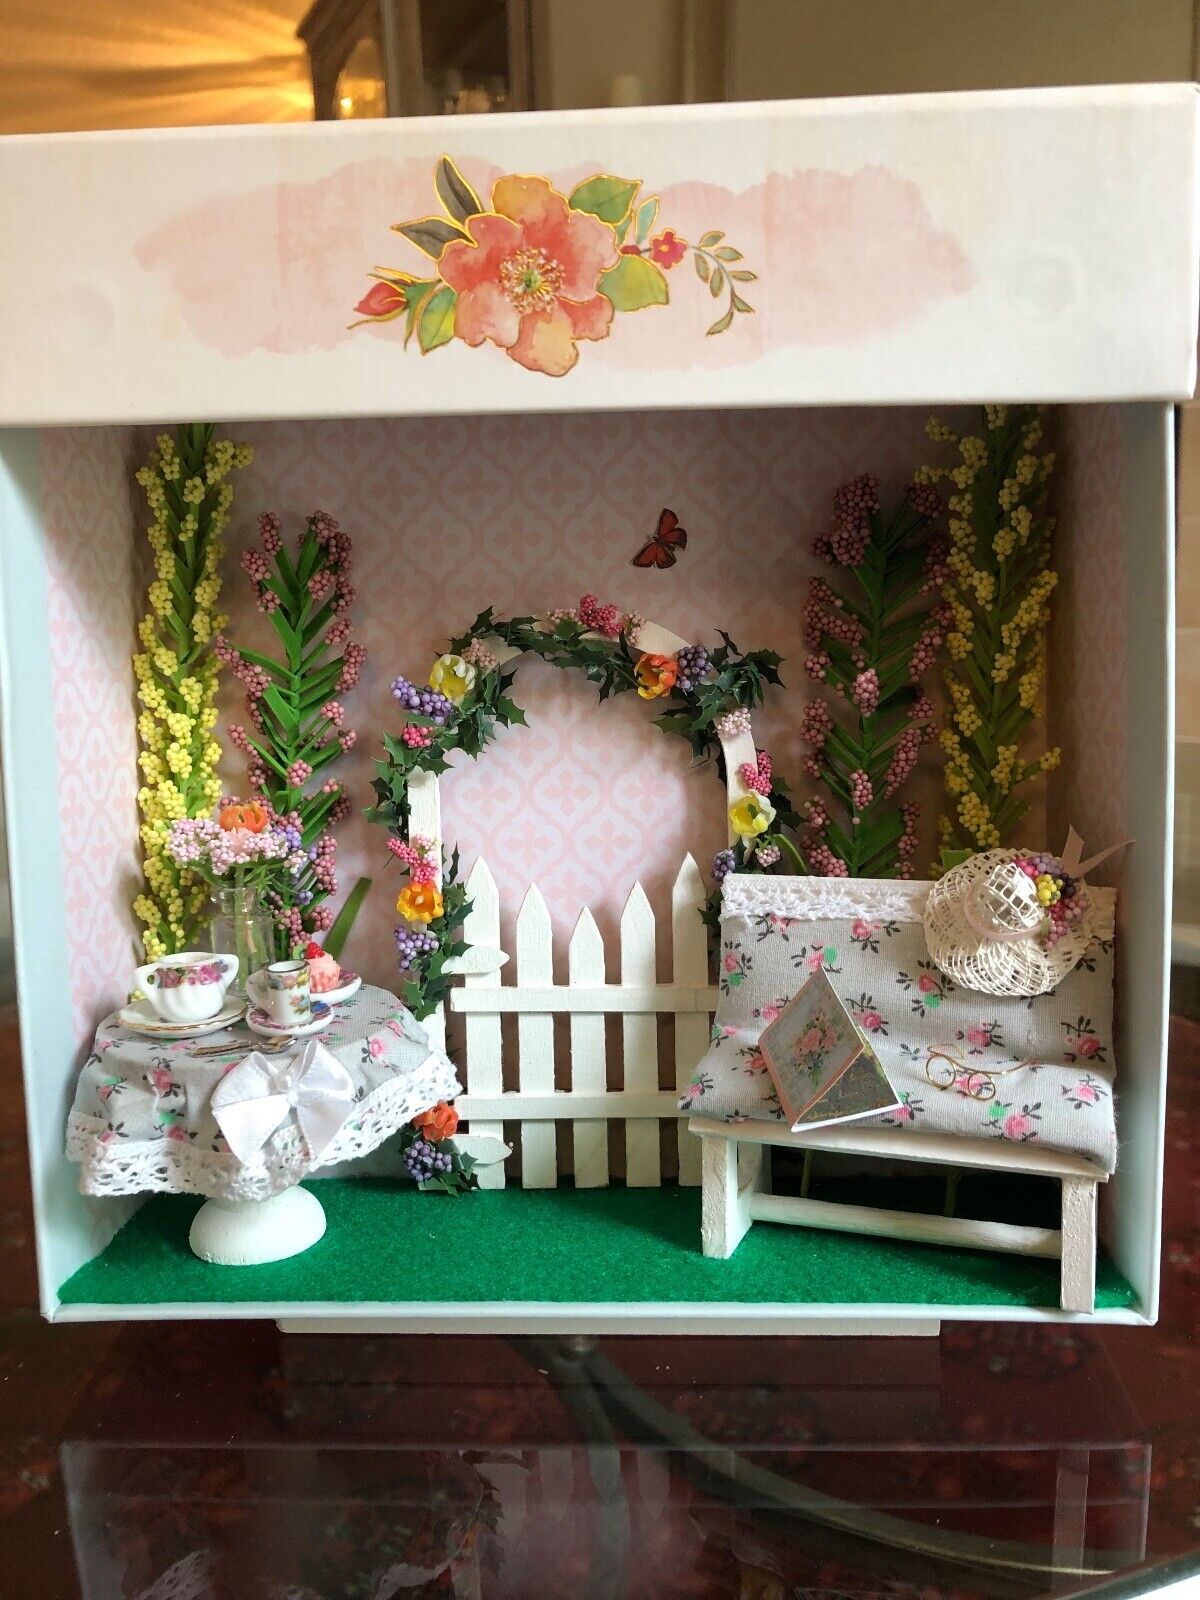 Cheerful Small Handcrafted MINIATURE GARDEN TEA Diorama 1:12 Scale